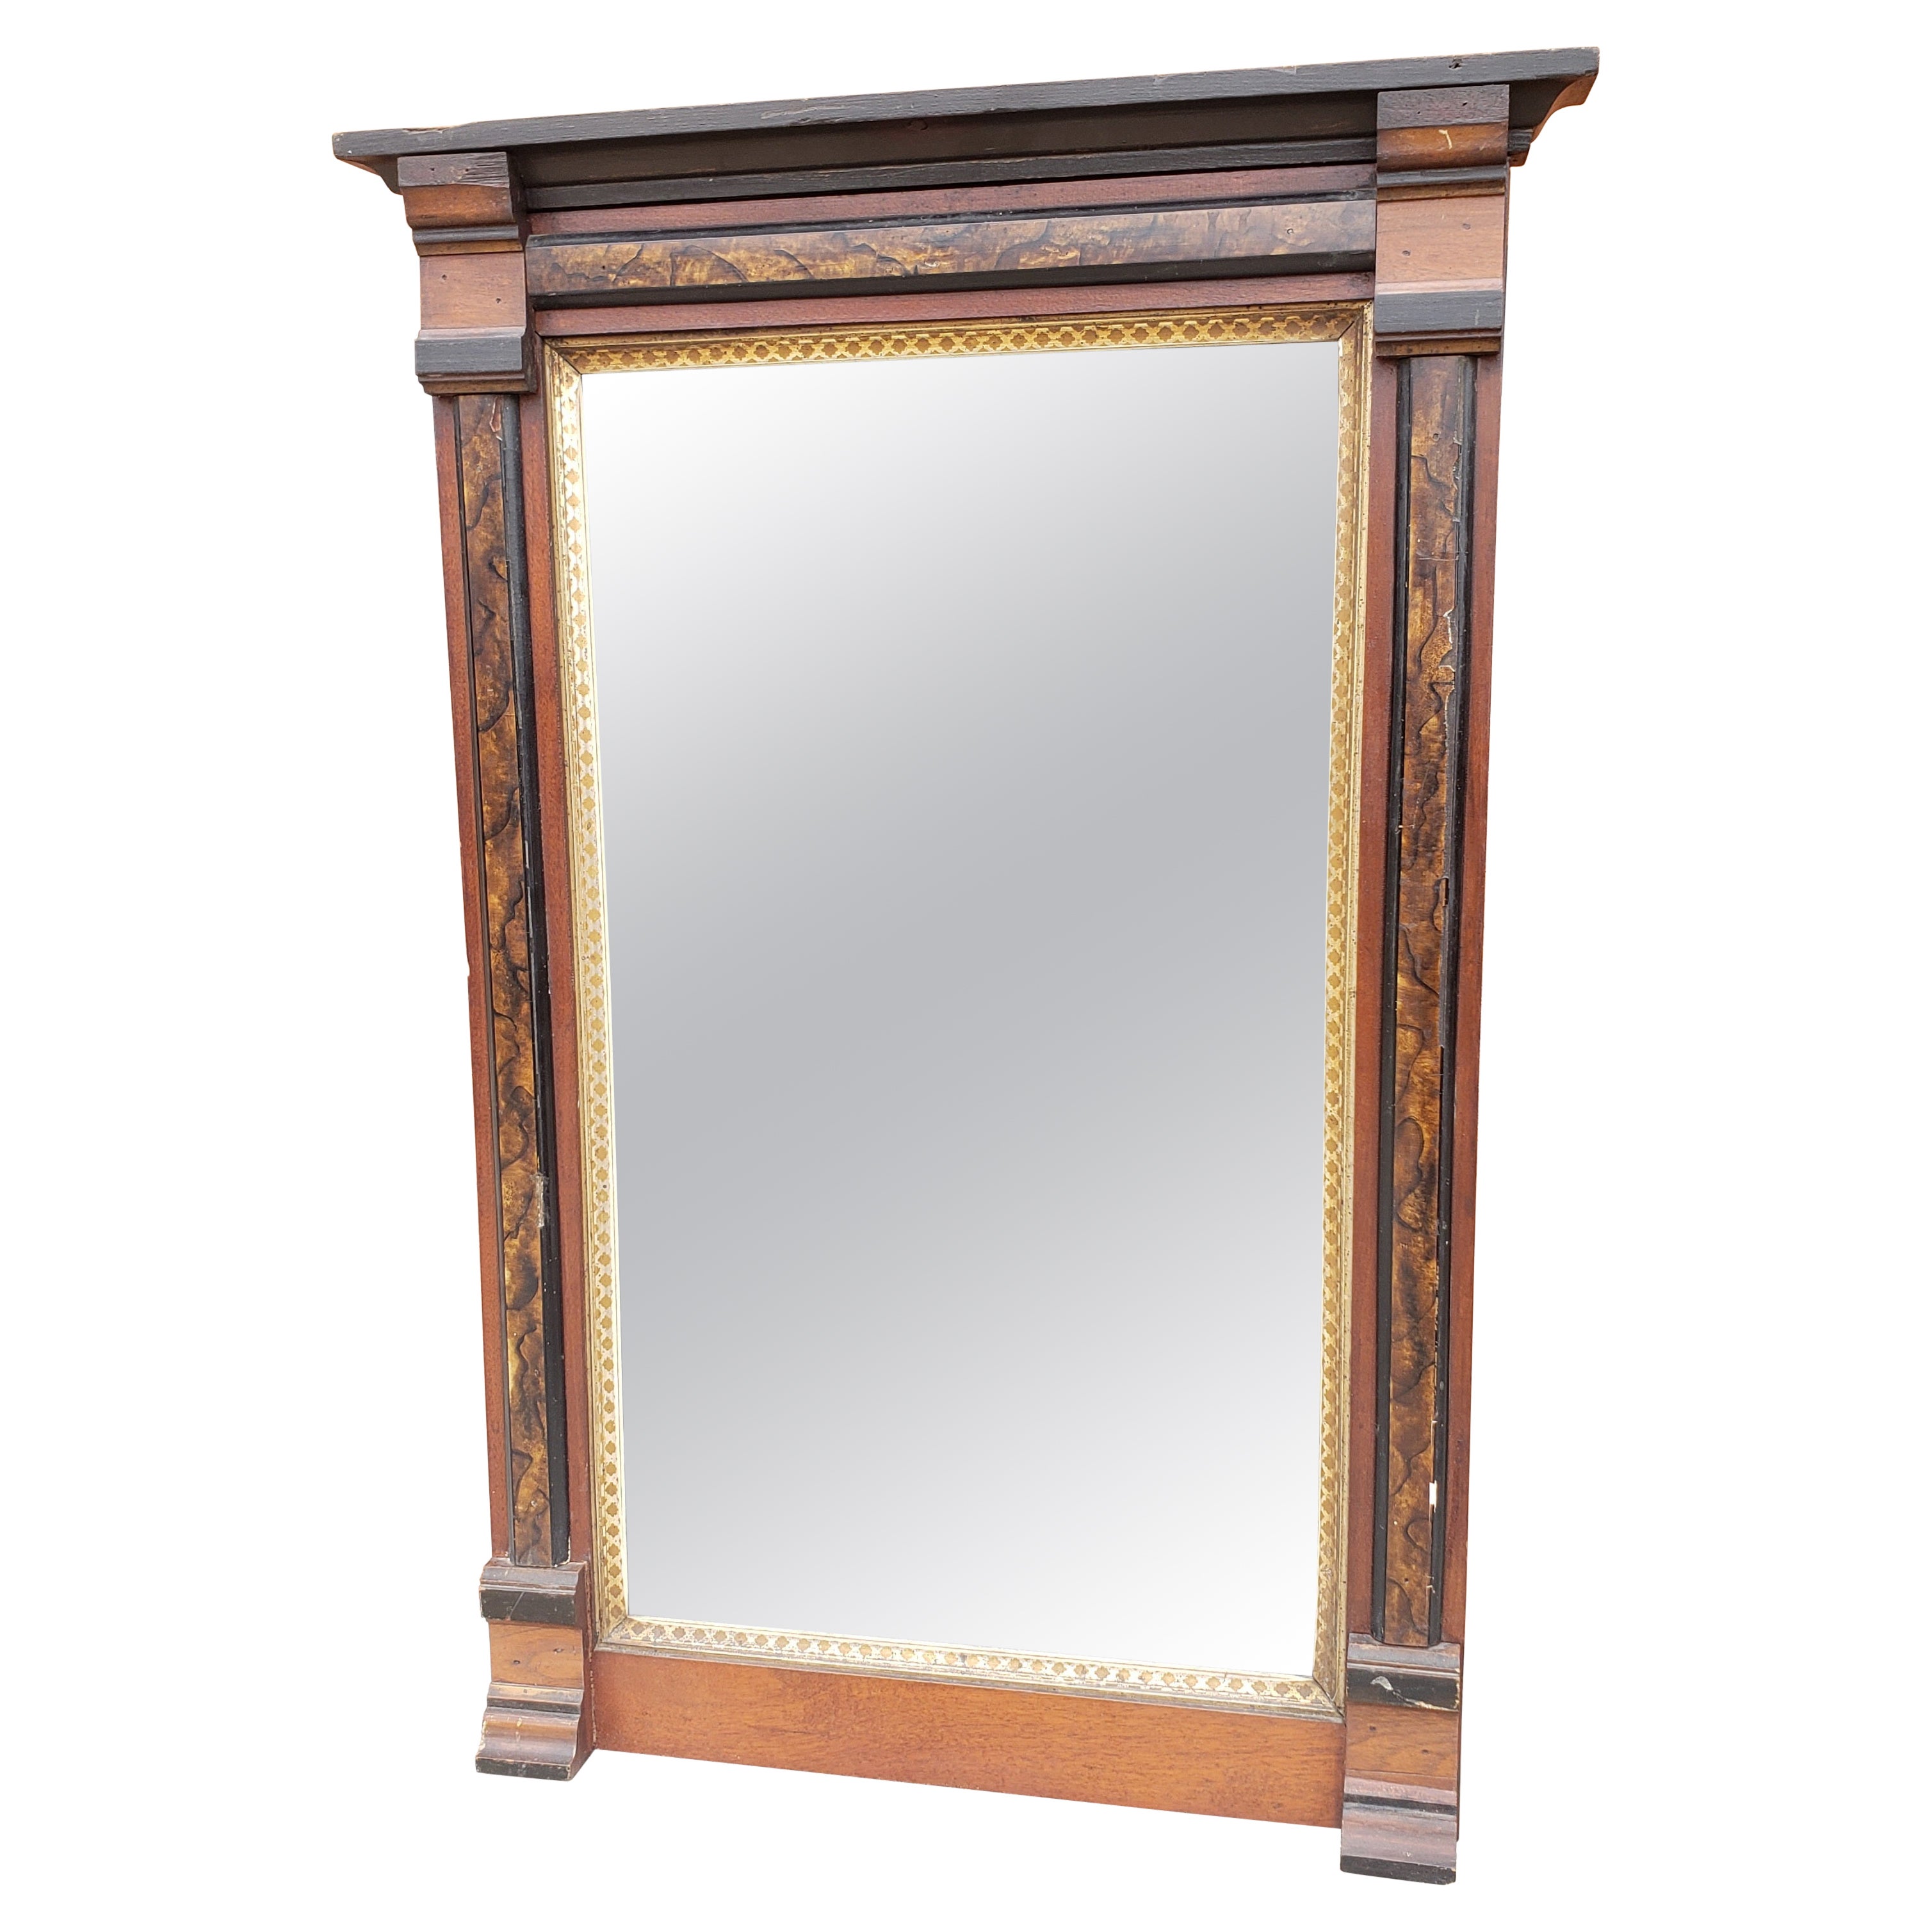 1890s American Classical Parcel Ebonized Mahogany Wall Mirror